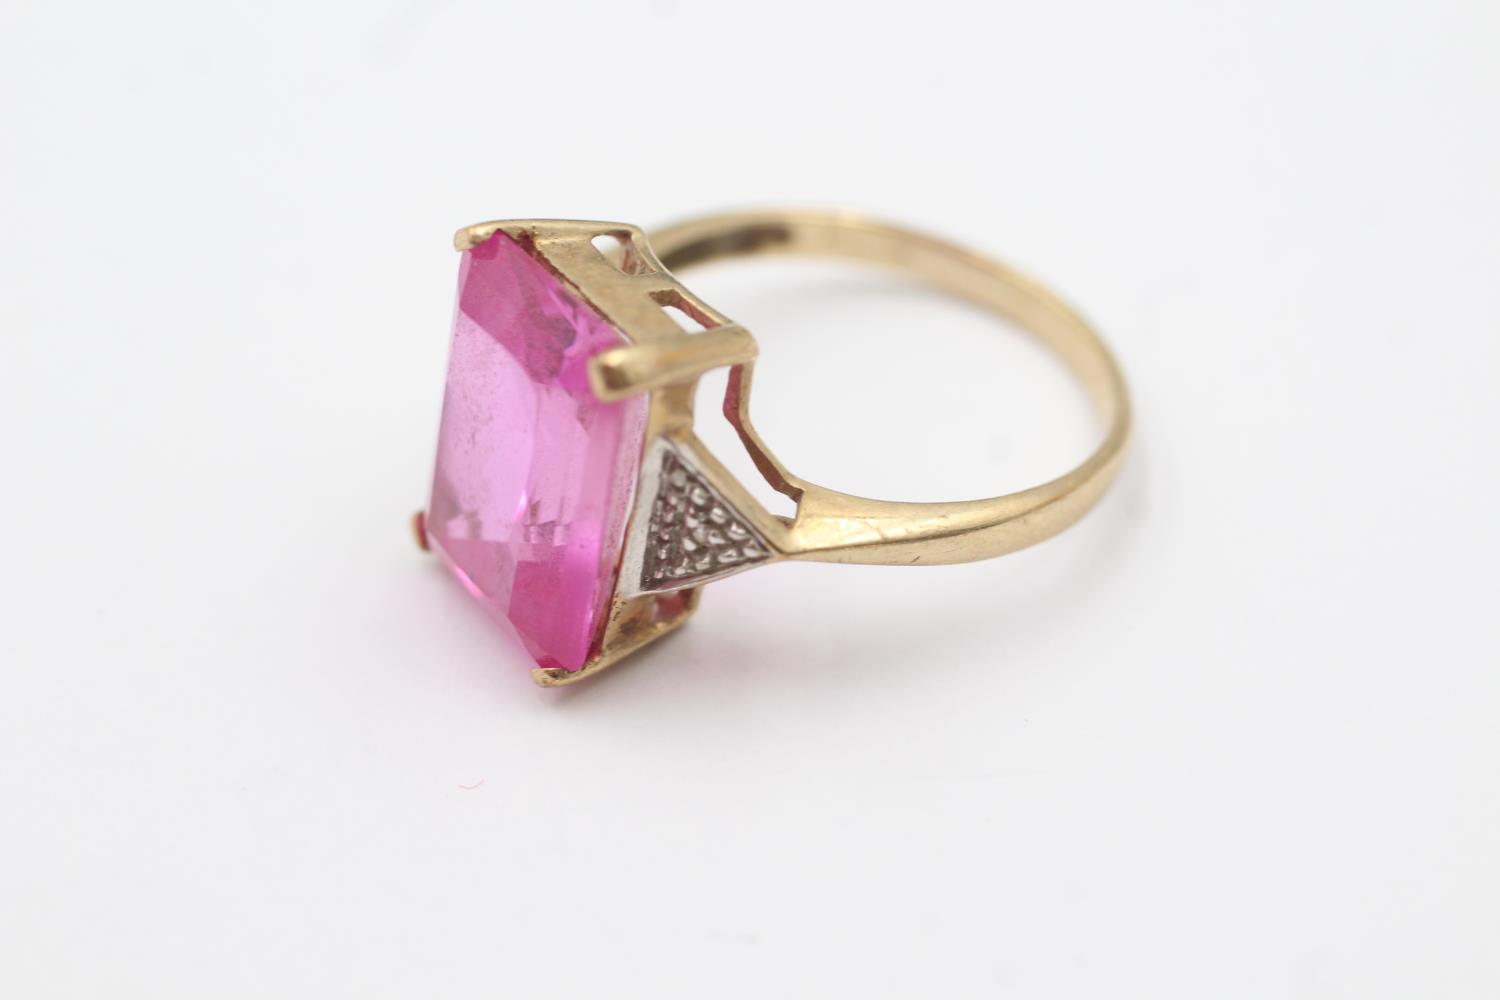 9ct gold vintage pink gemstone & diamond cocktail ring (4g) Size Q - Image 2 of 4